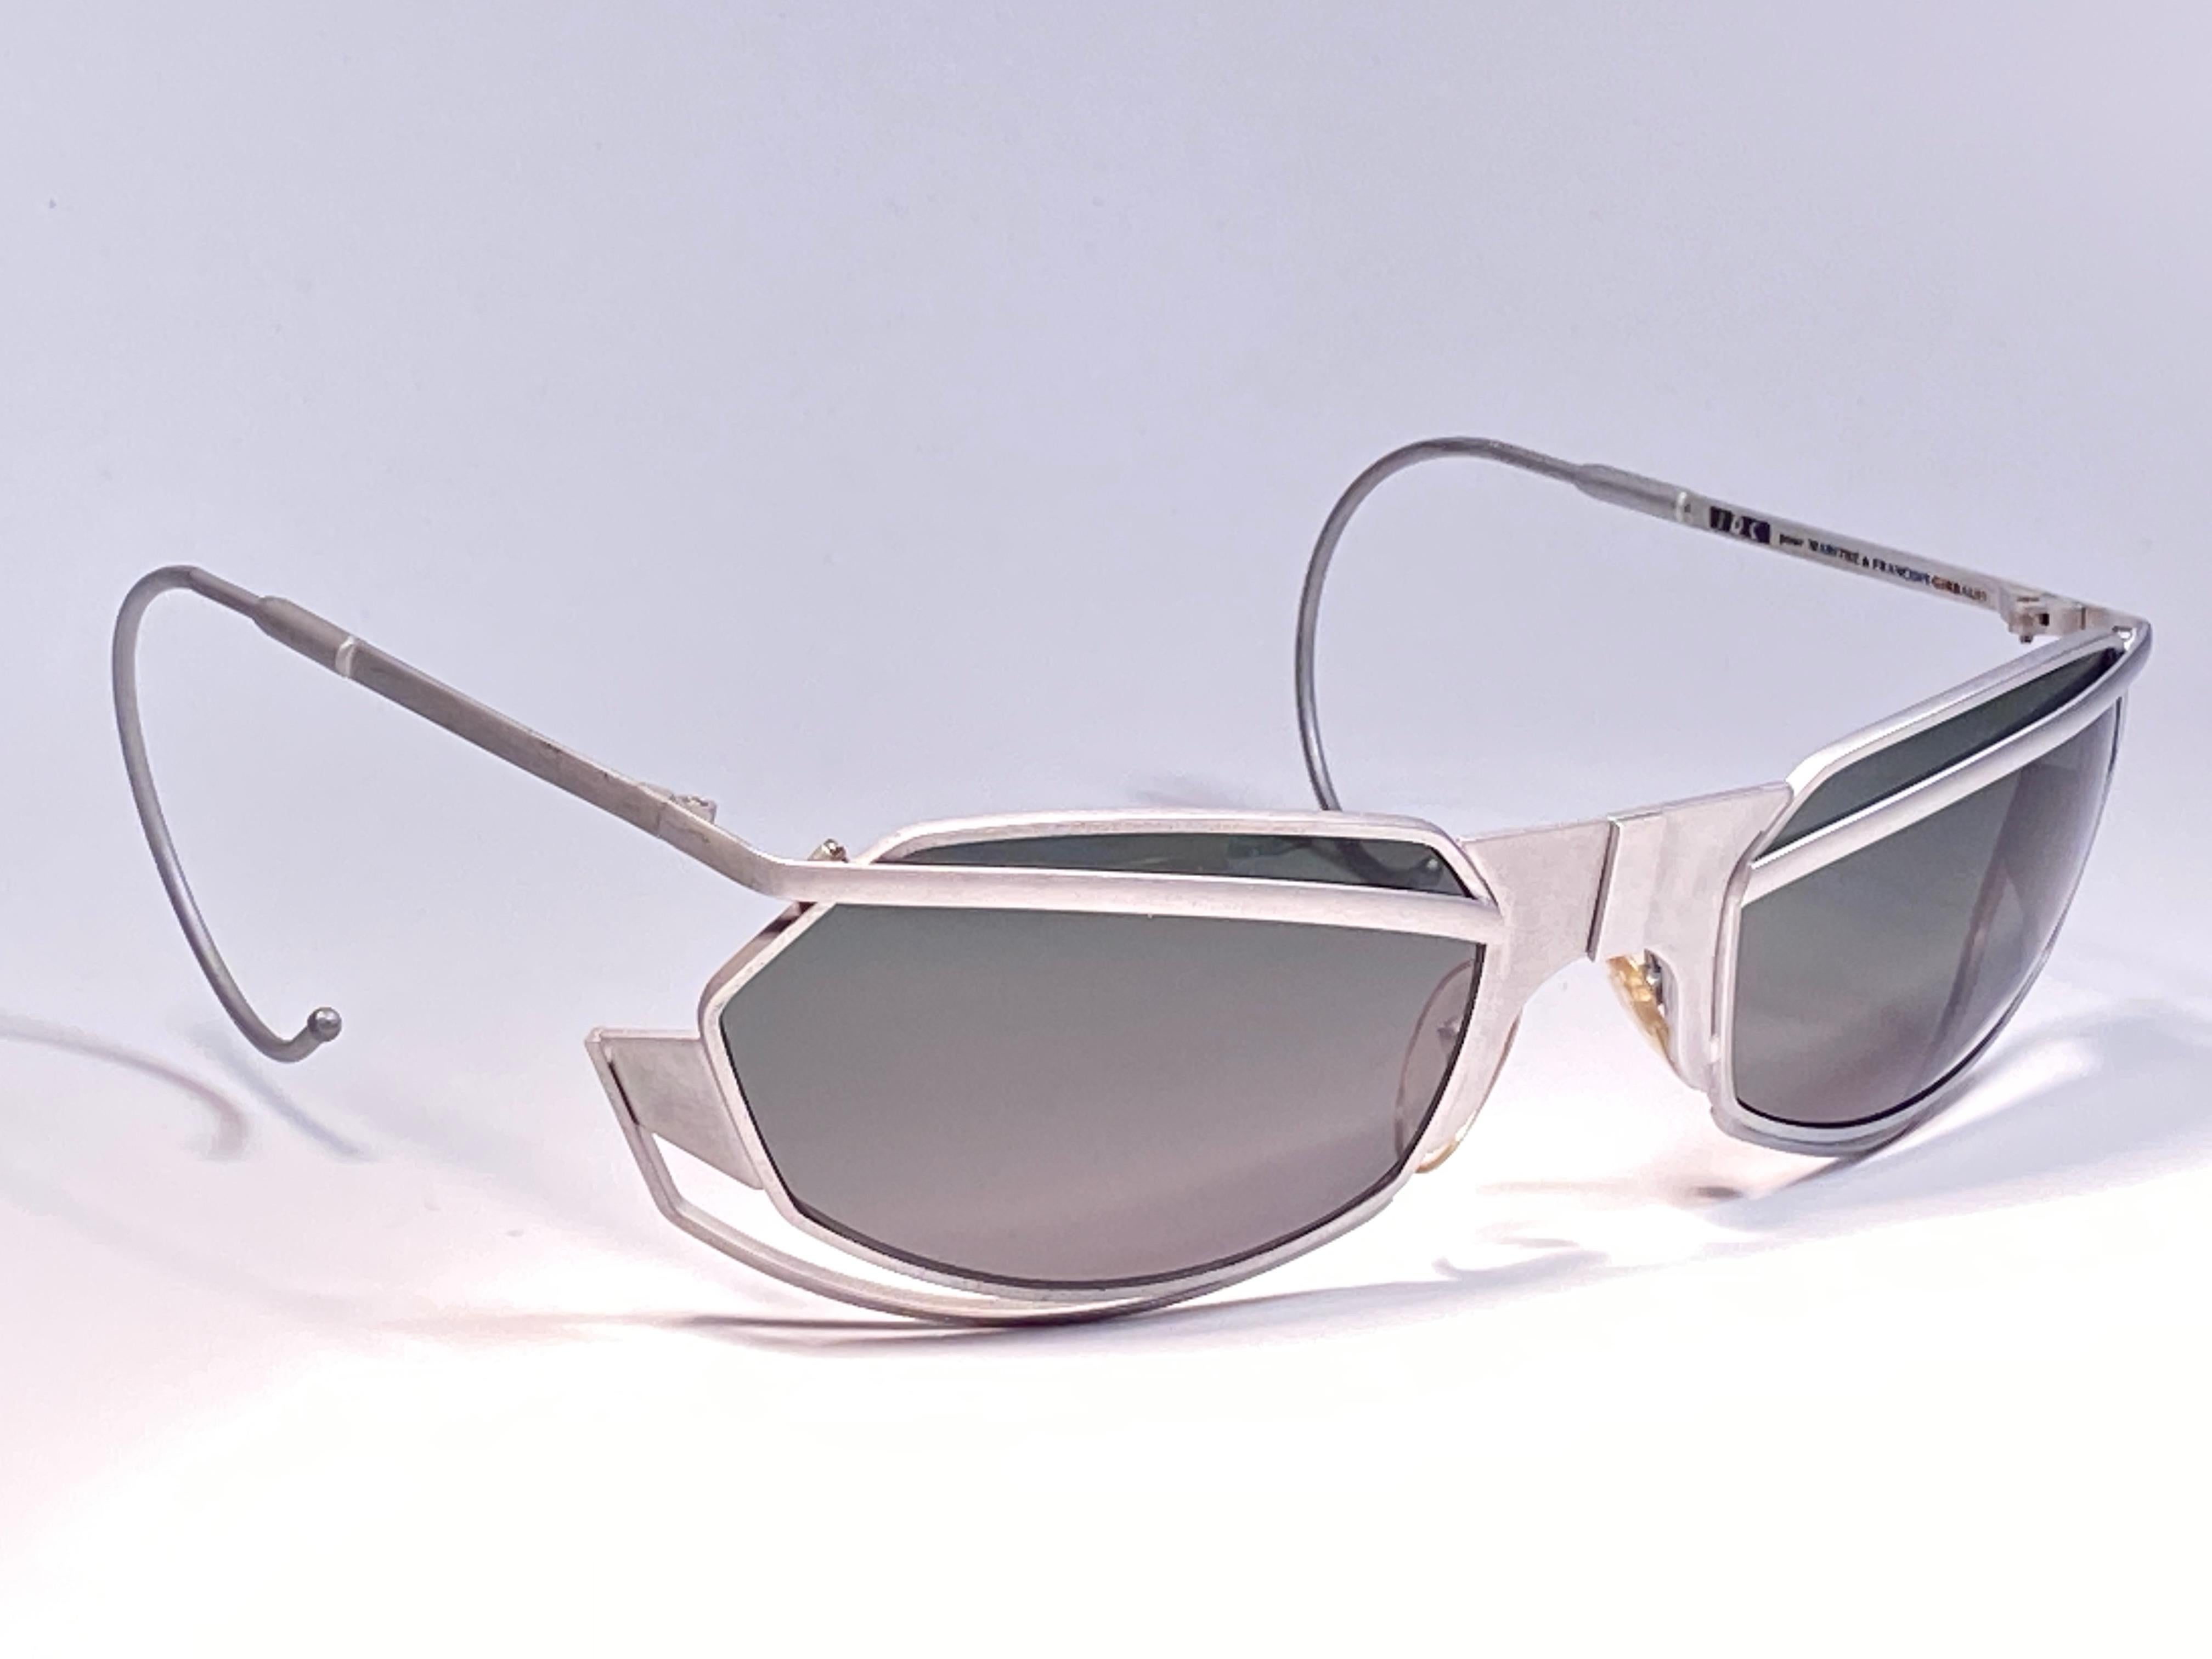 New Vintage IDC Pour Marithe Francois Girbaud Folding Silver Sunglasses France 1